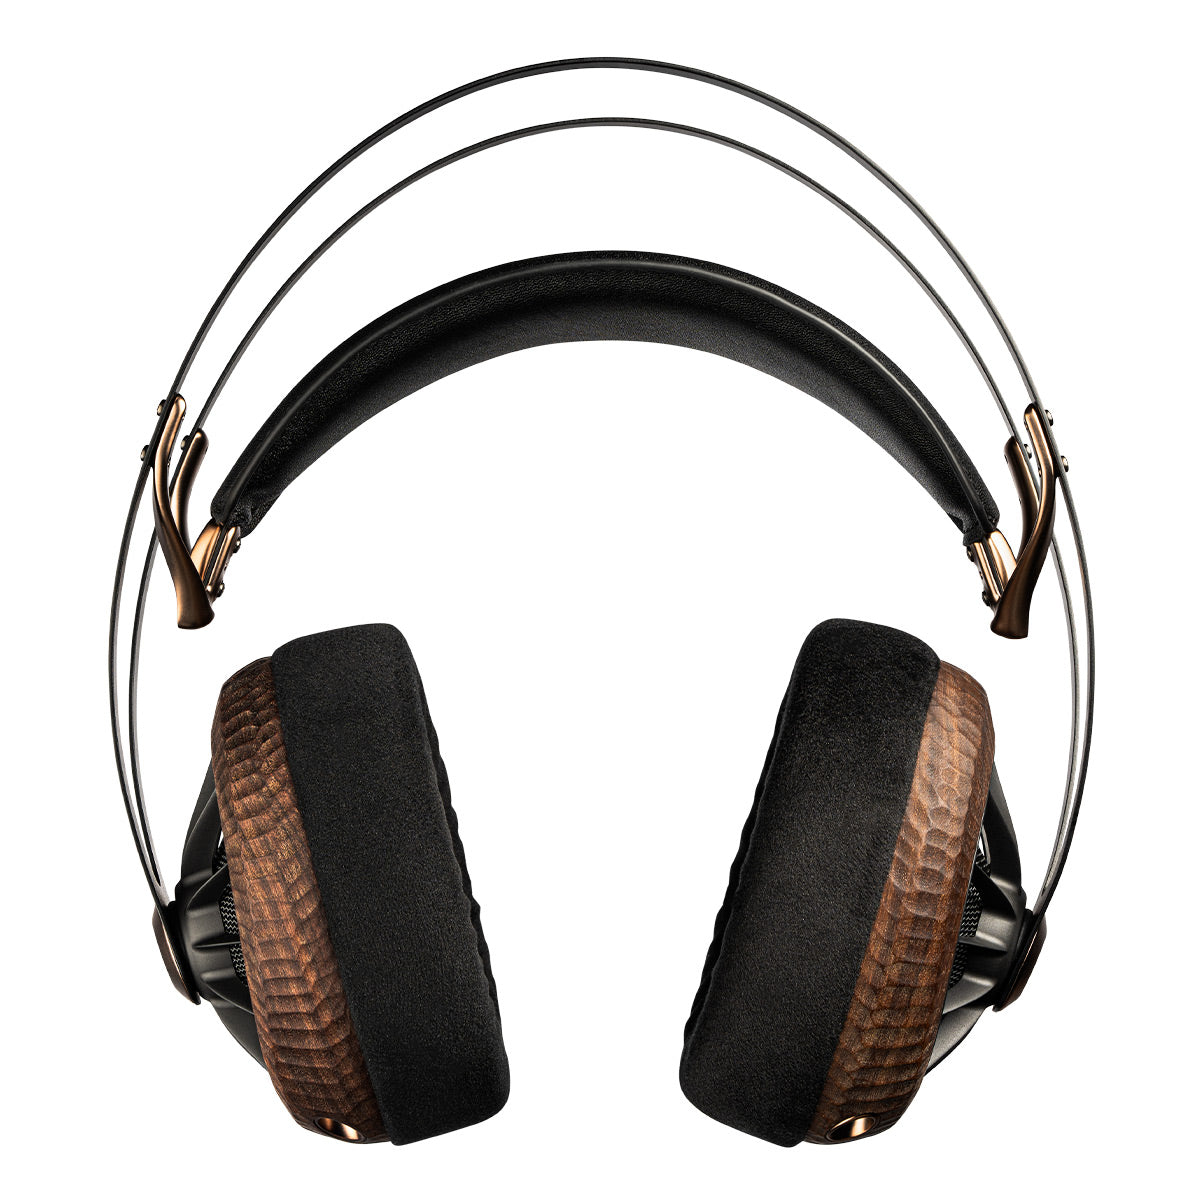 Meze Audio 109 Pro Primal Edition Dynamic Open-Back Headphones